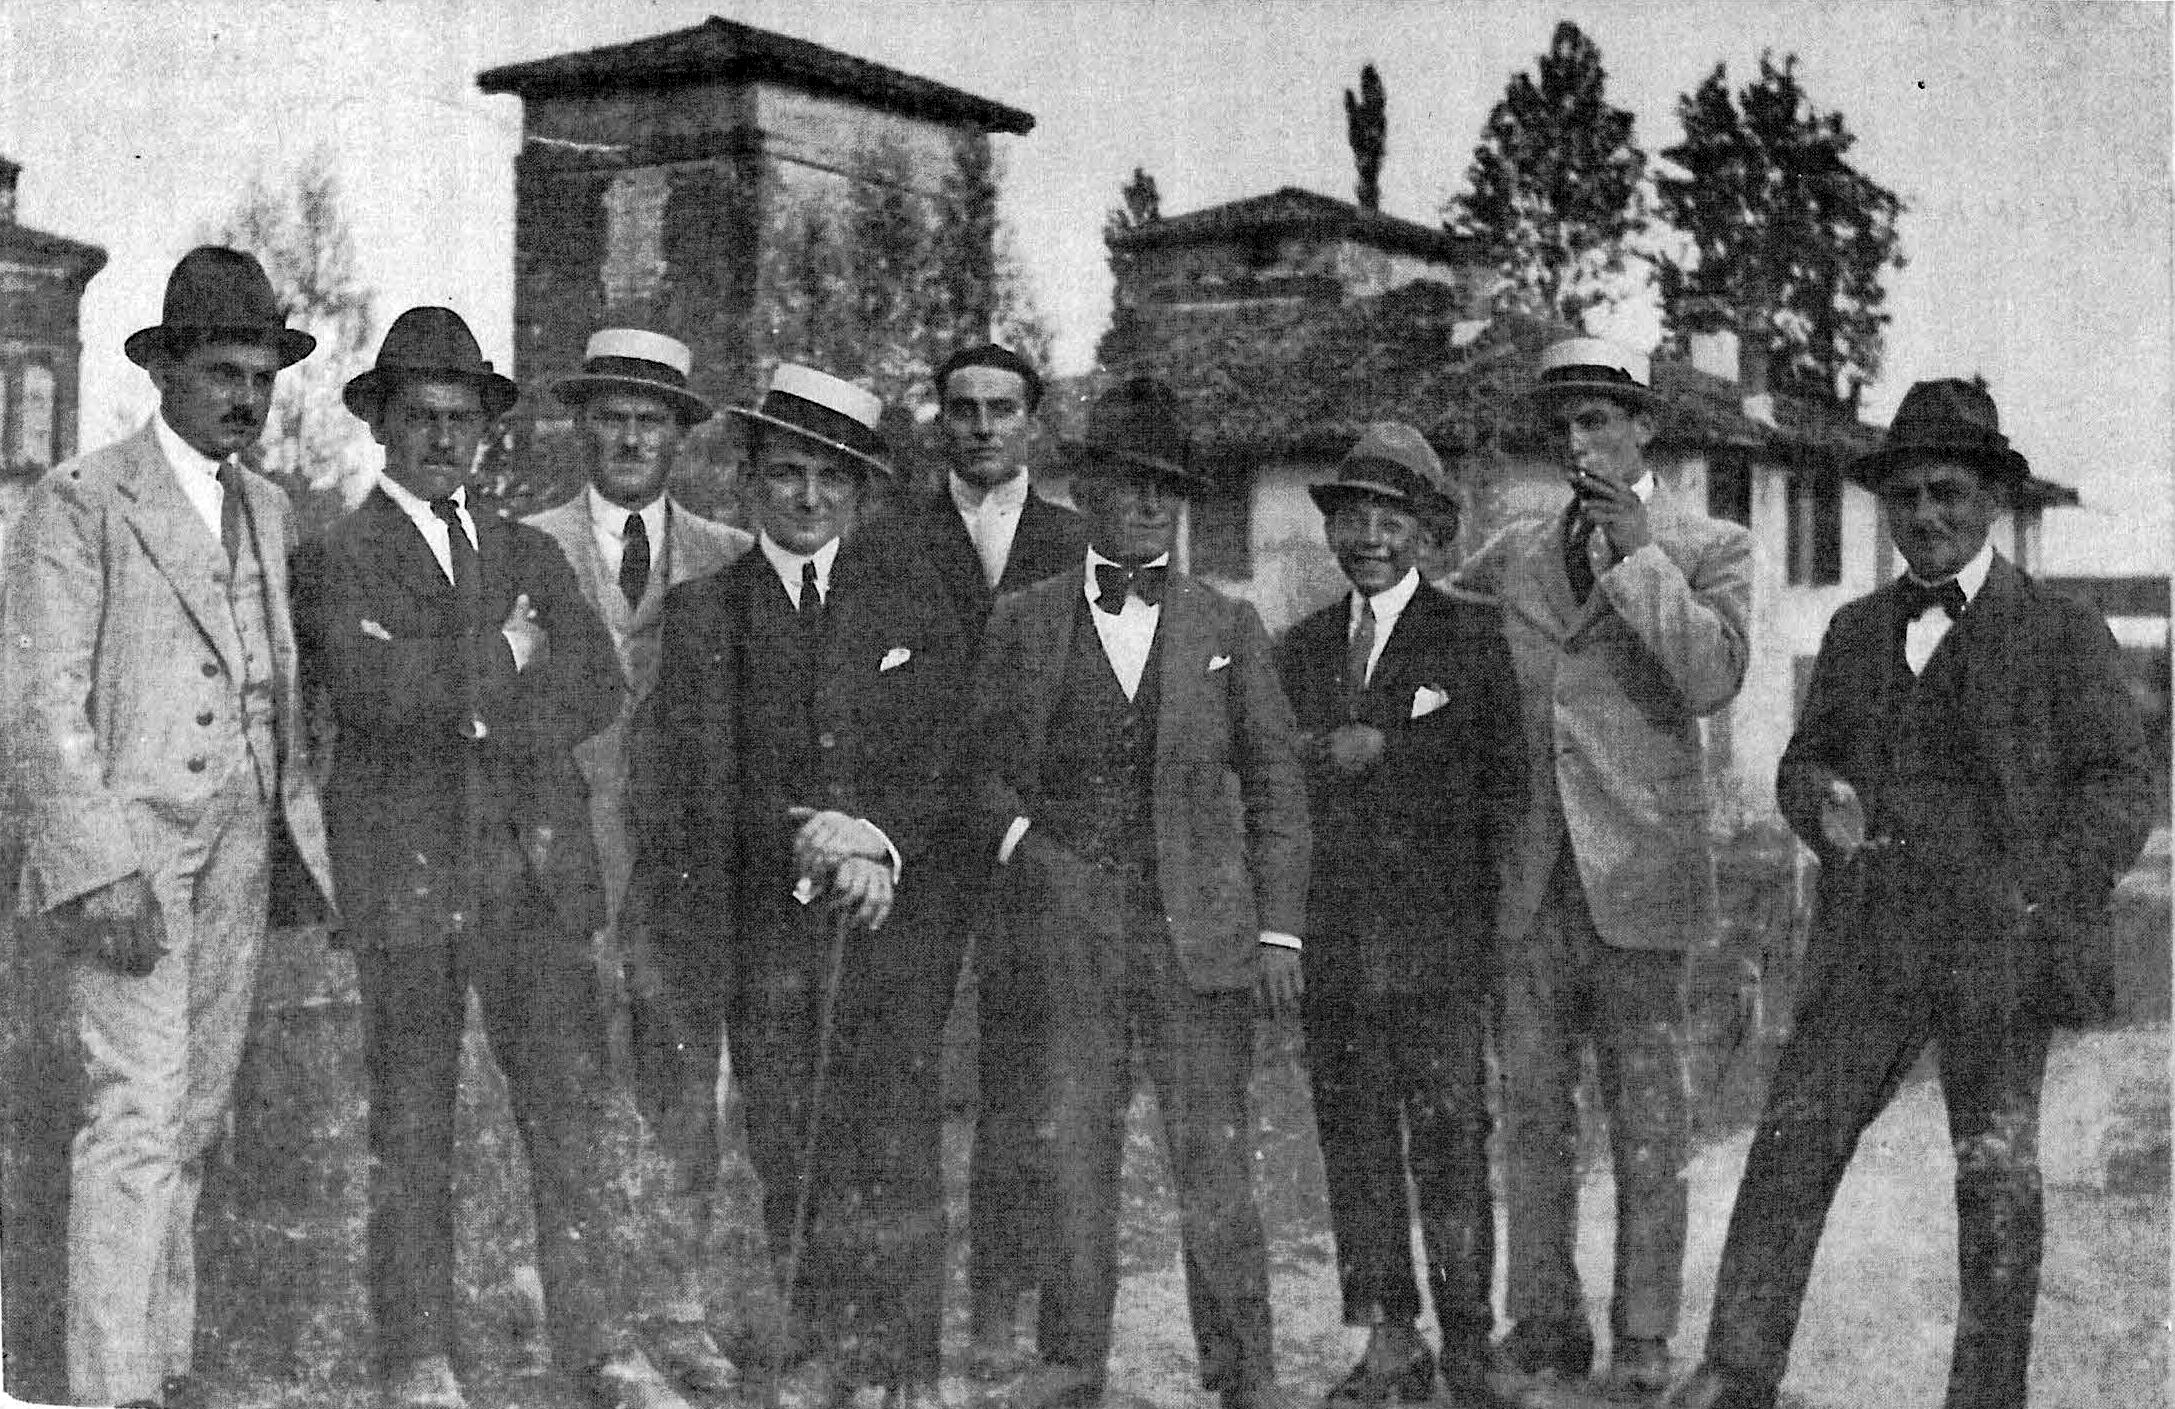 Ragazzi in posa 1920